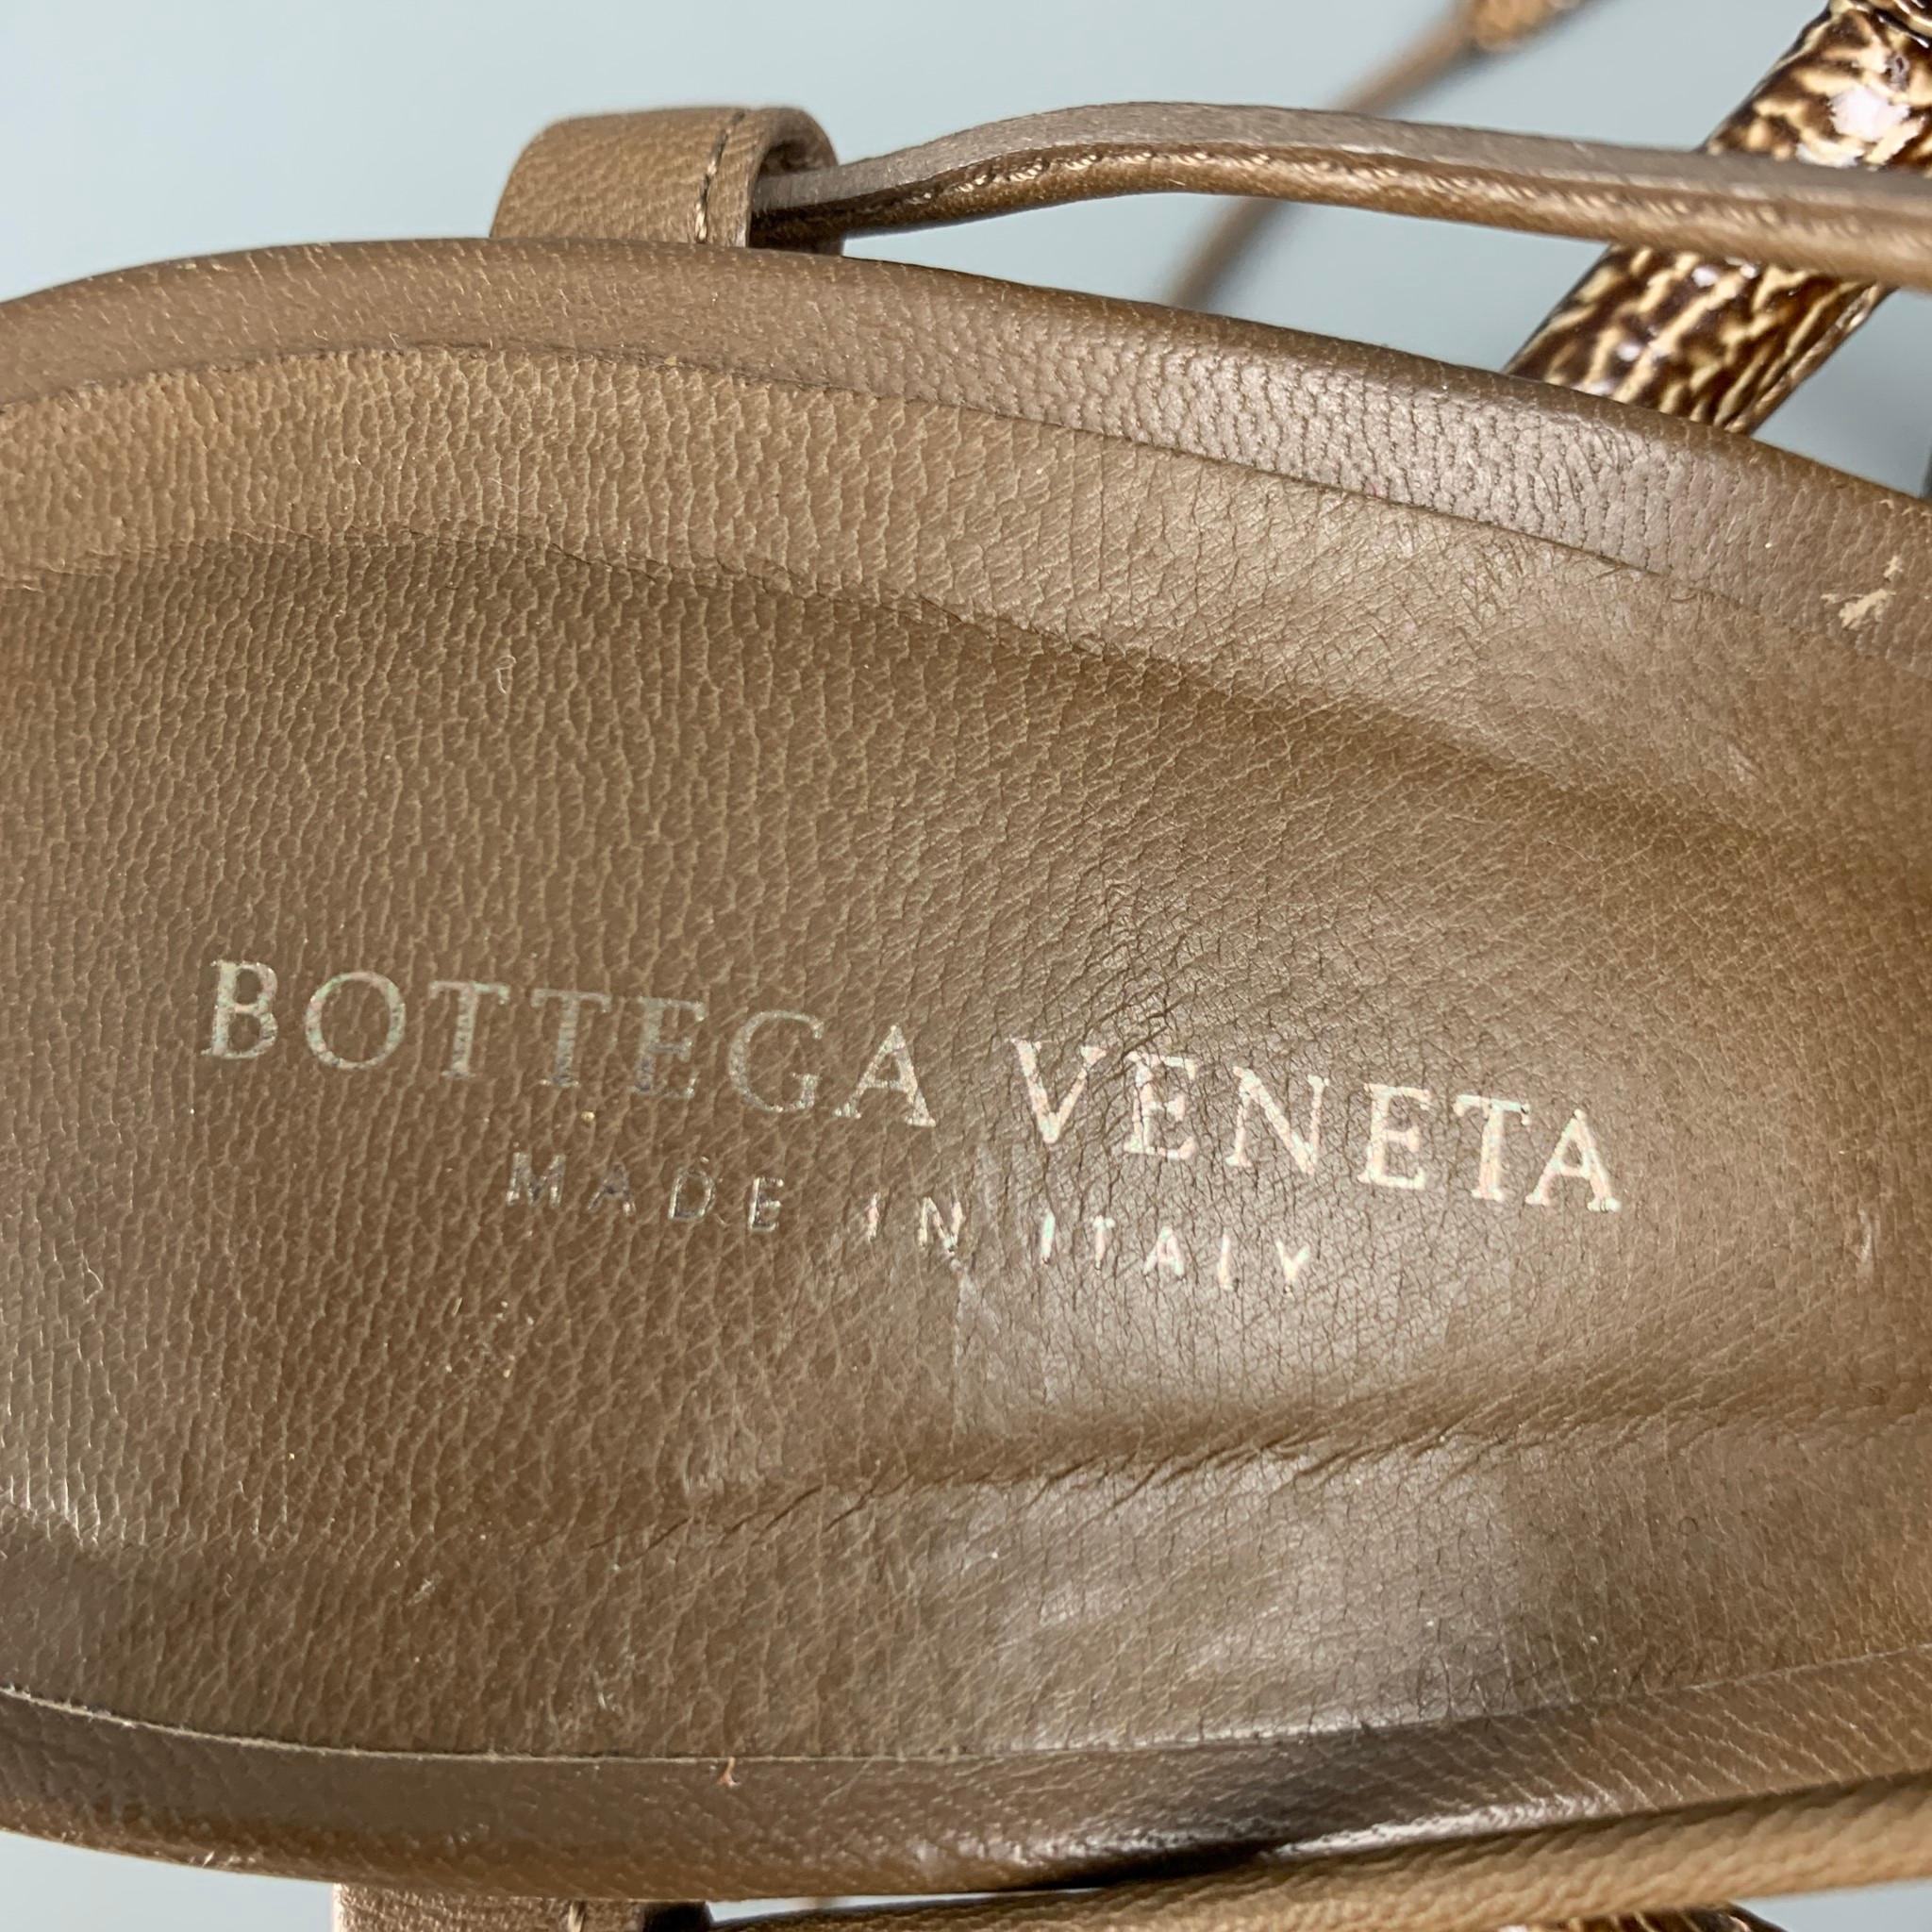 BOTTEGA VENETA Size 8.5 Brown Olive Woven Patent Leather Wedge Sandals 4